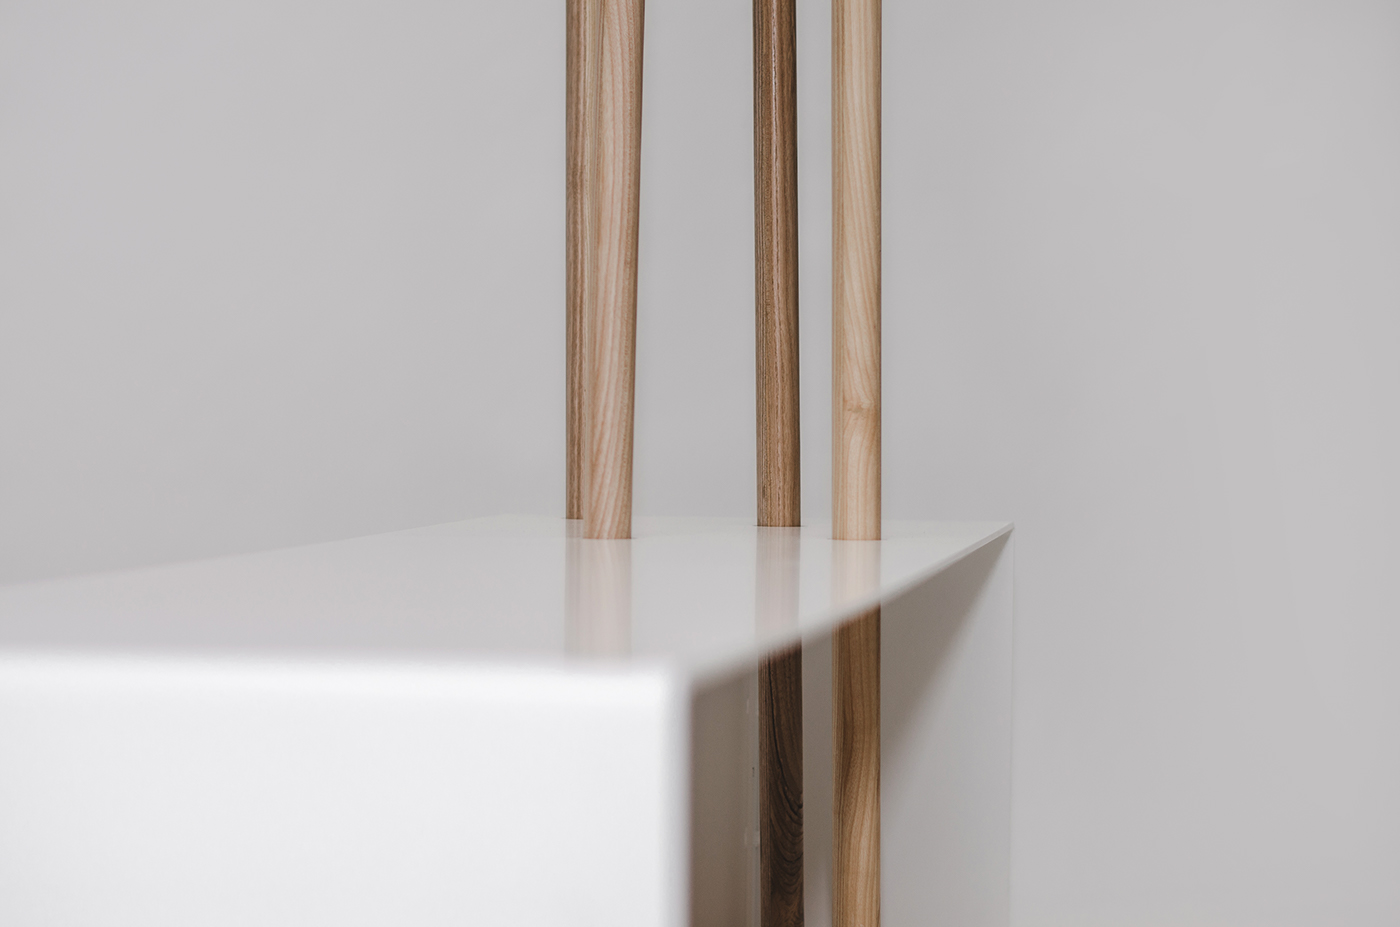 hanger hilka wood steel ukrainiandesign furniture madeinukrain wooden hanger mzpa minimalist